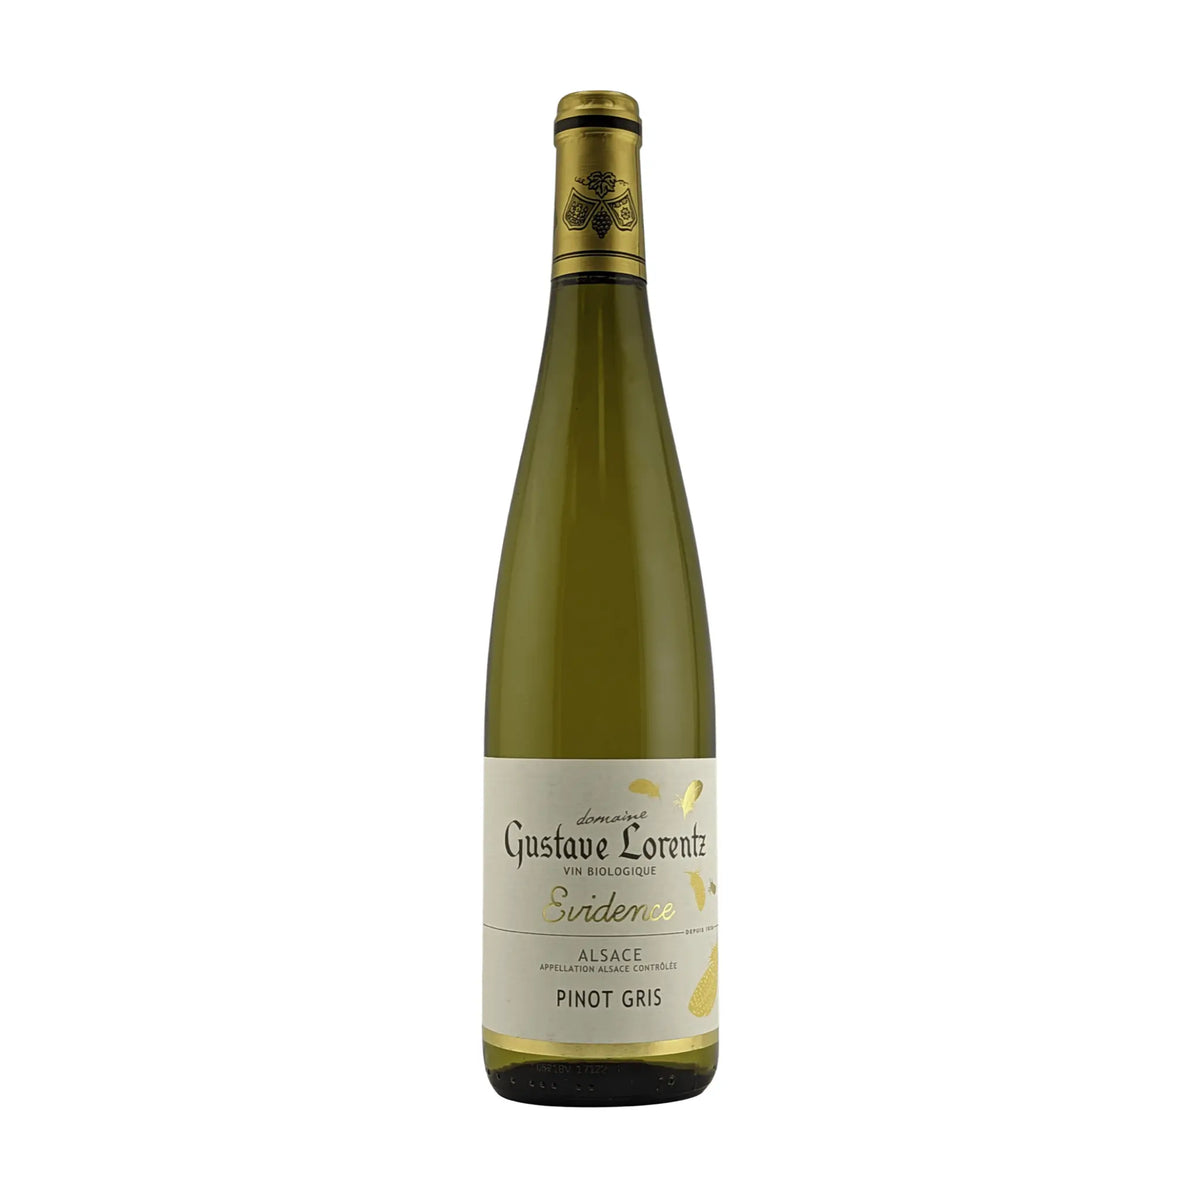 Gustave Lorentz-Weißwein-Pinot Gris-Elsass-Frankreich-Evidence Pinot Gris - Organic-WINECOM